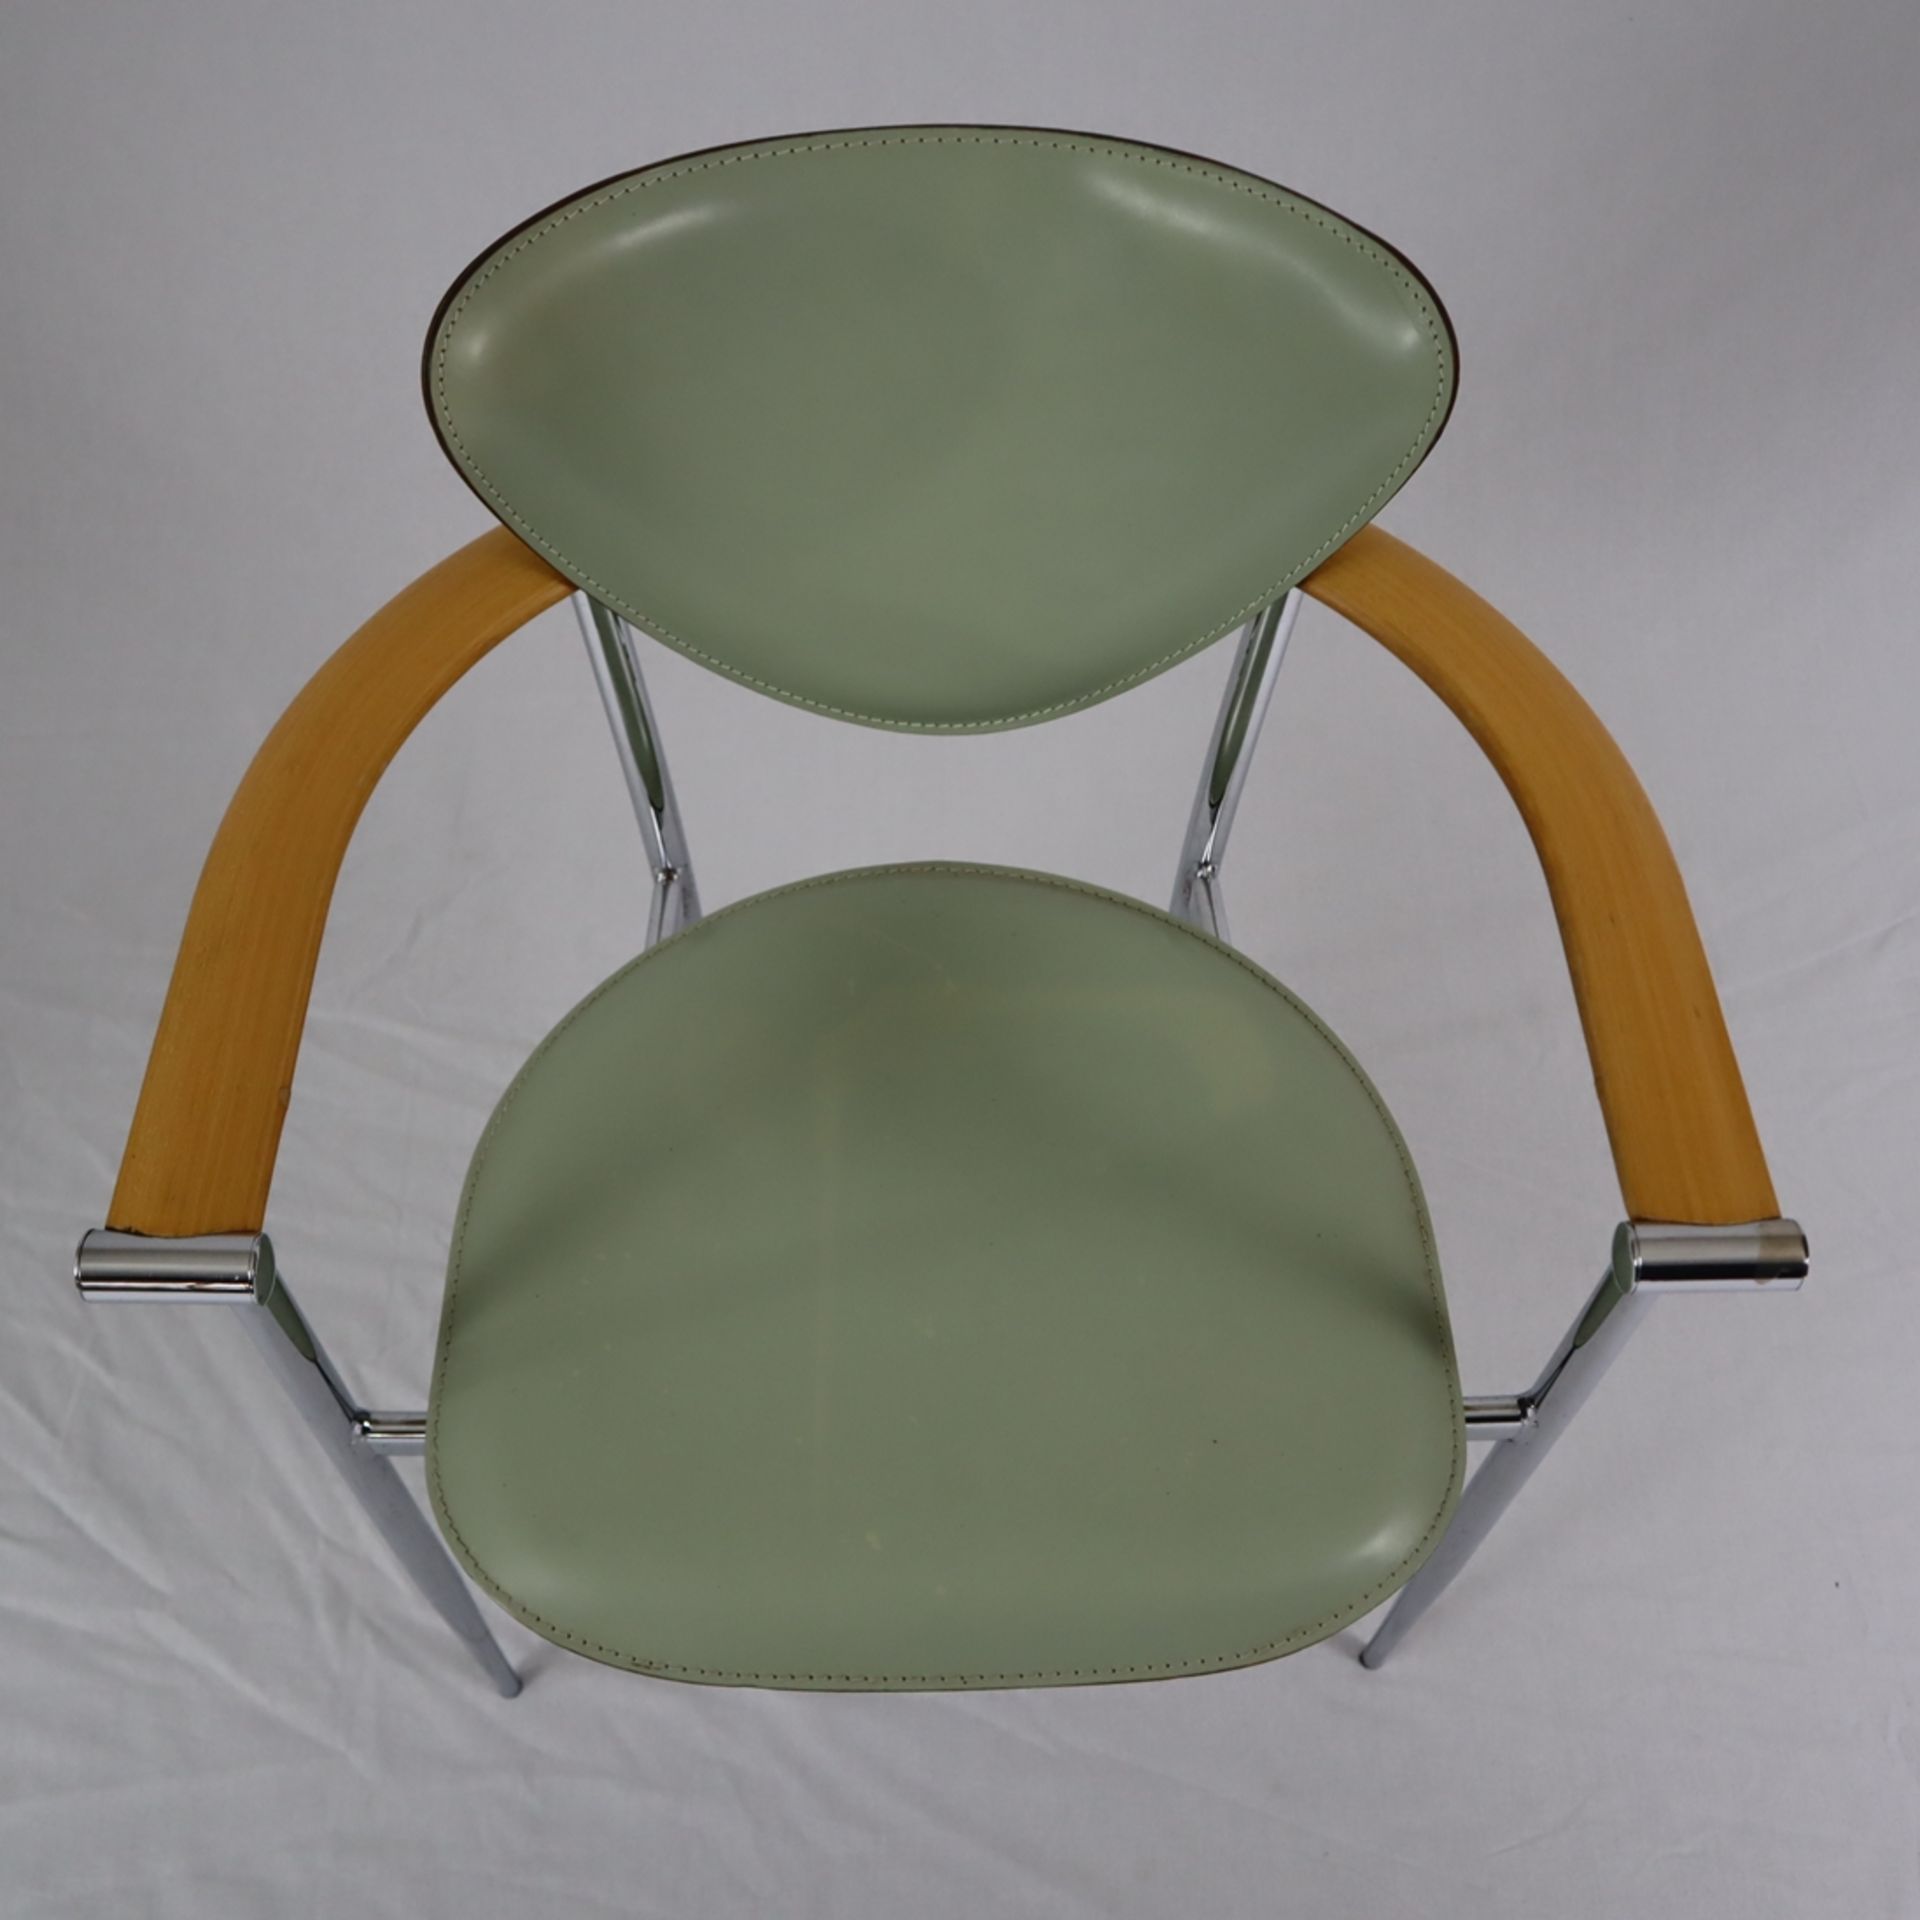 Design-Stuhl - Marylin Stiletto, Arrben/Italien, 1980er Jahre, Stahlrohr, seladonfarbene Ledersitz  - Bild 2 aus 8